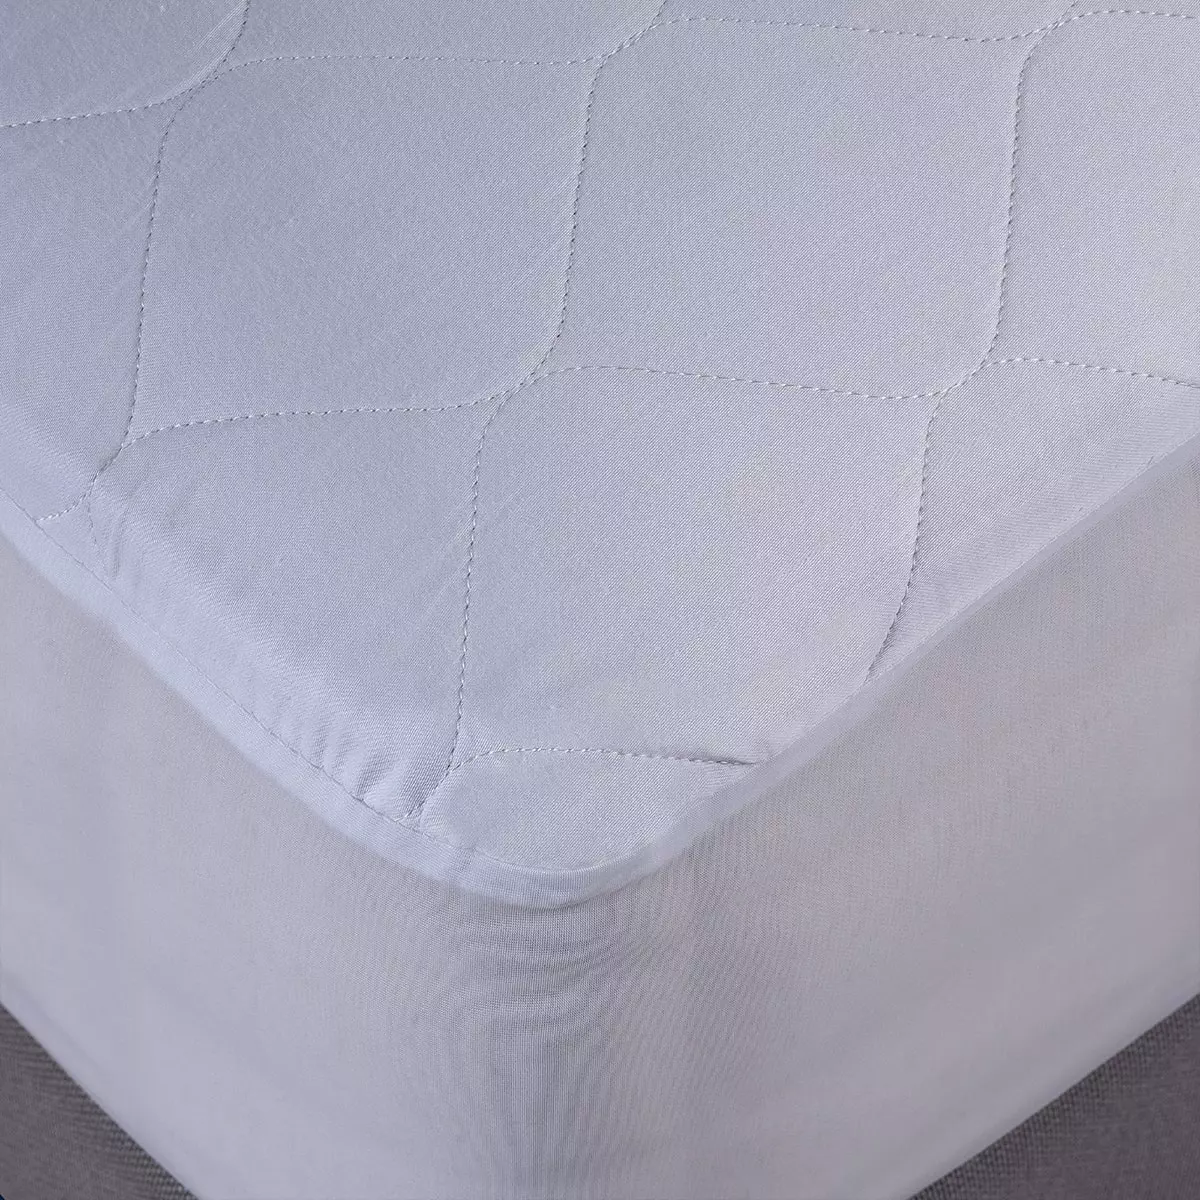 Hälsa Åreskutan Fitted Mattress Protector Cotton Fabric